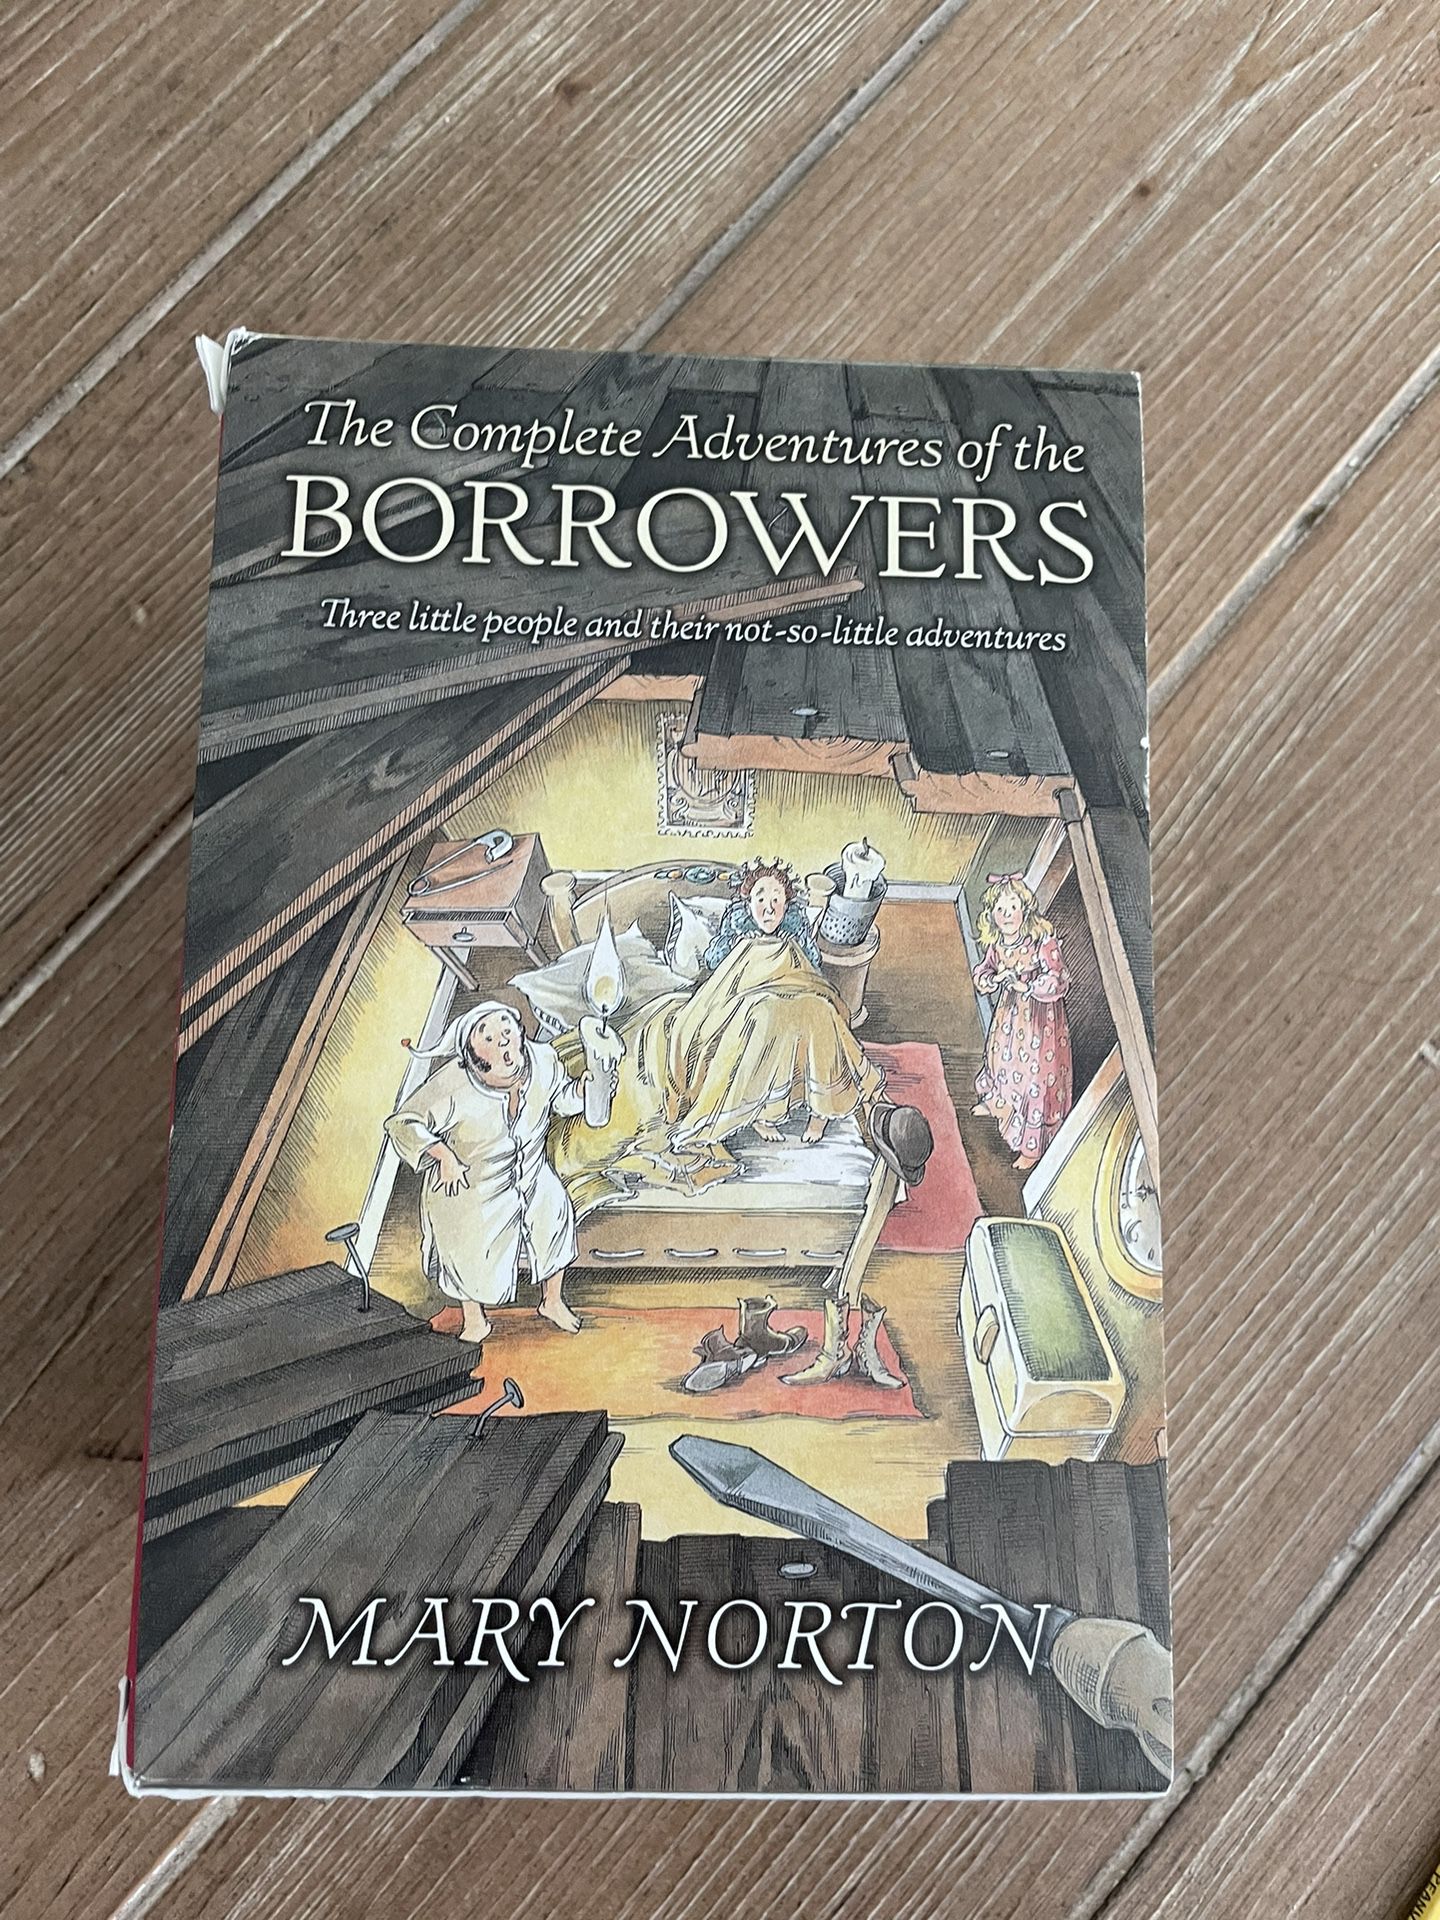 The borrowers book Set